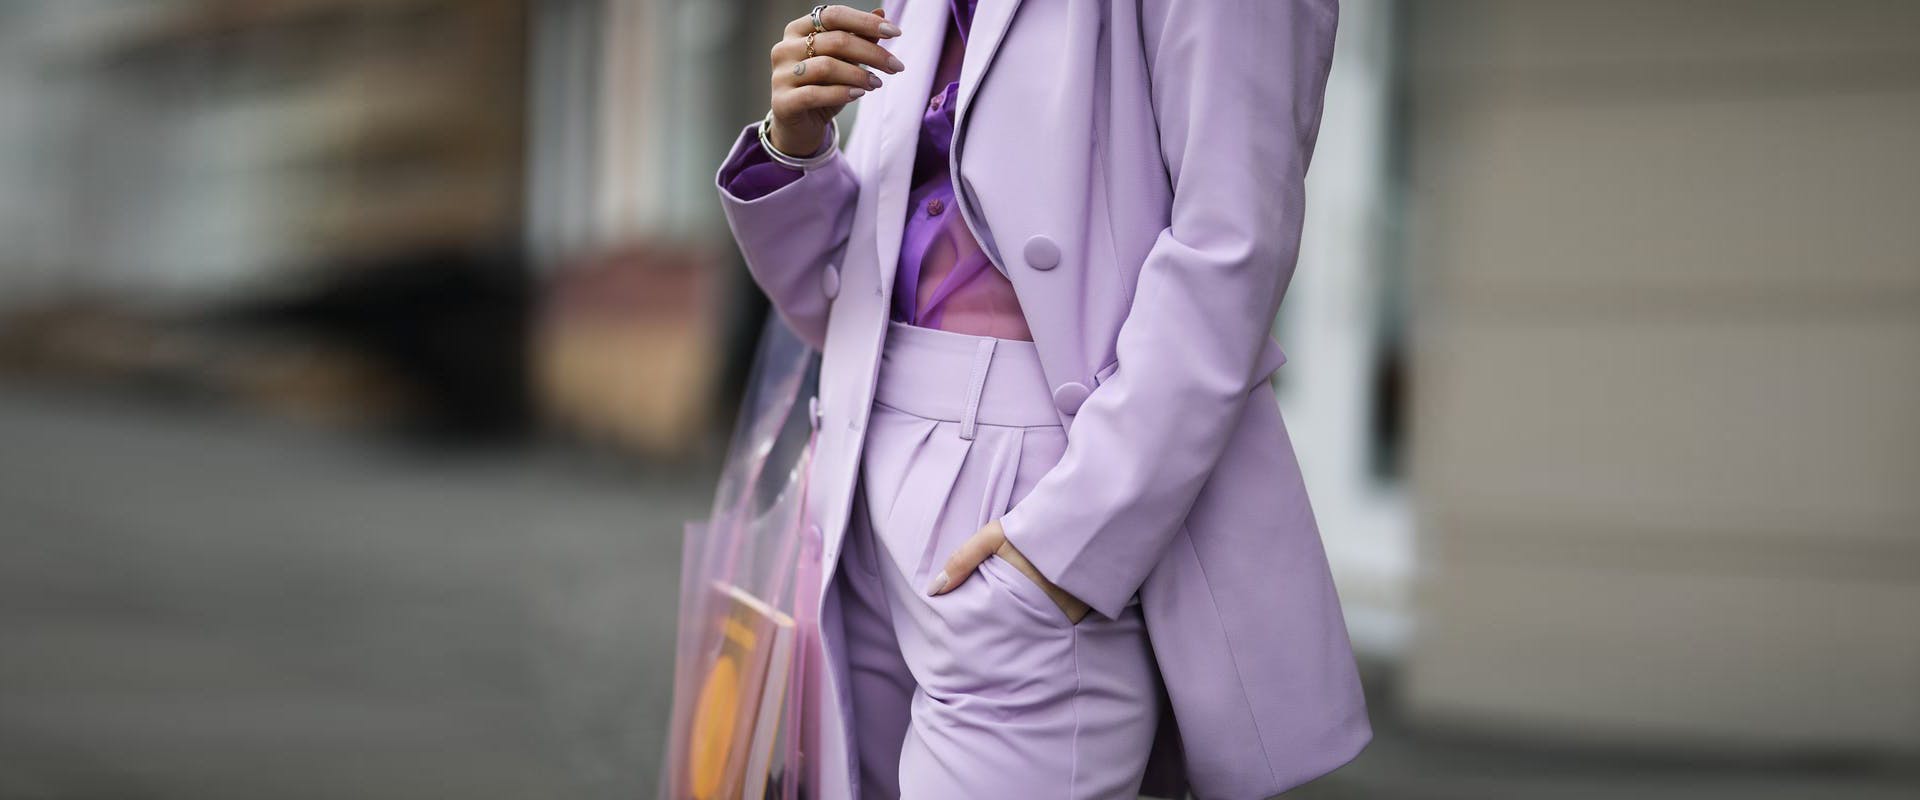 clothing apparel coat overcoat suit